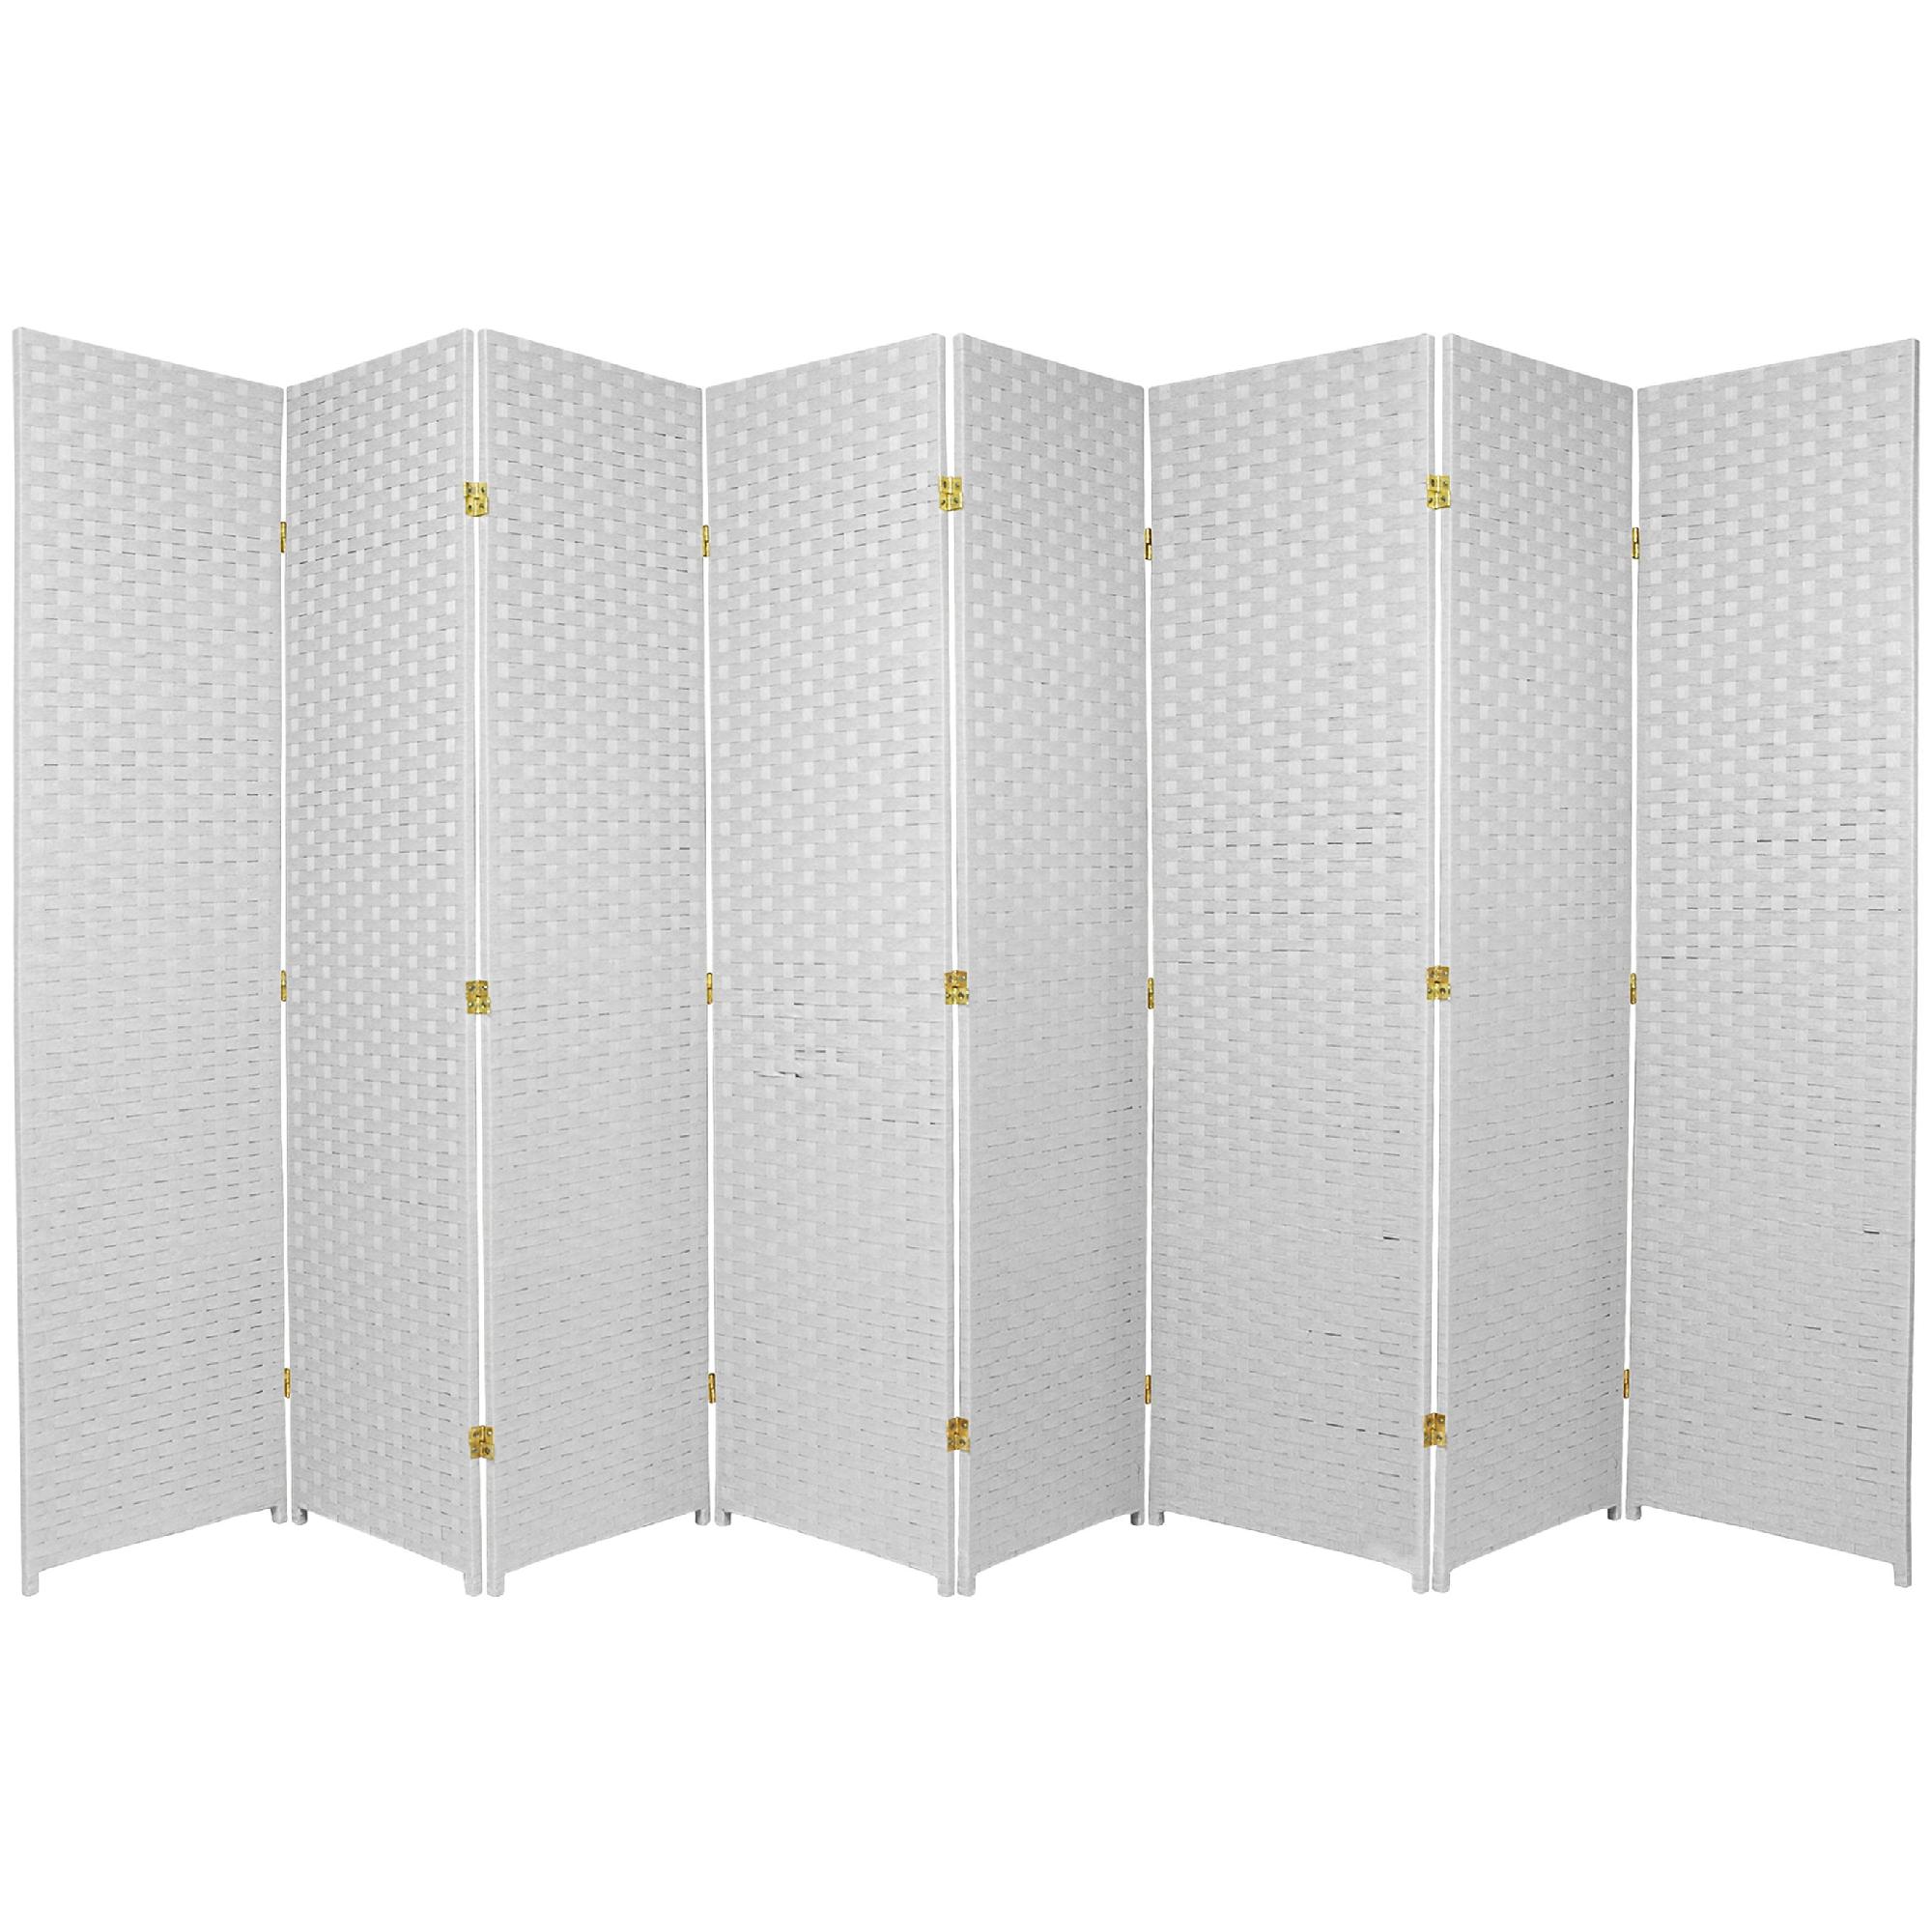 Oriental Furniture 6 ft. Tall Woven Fiber Room Divider - 8 Panel - White